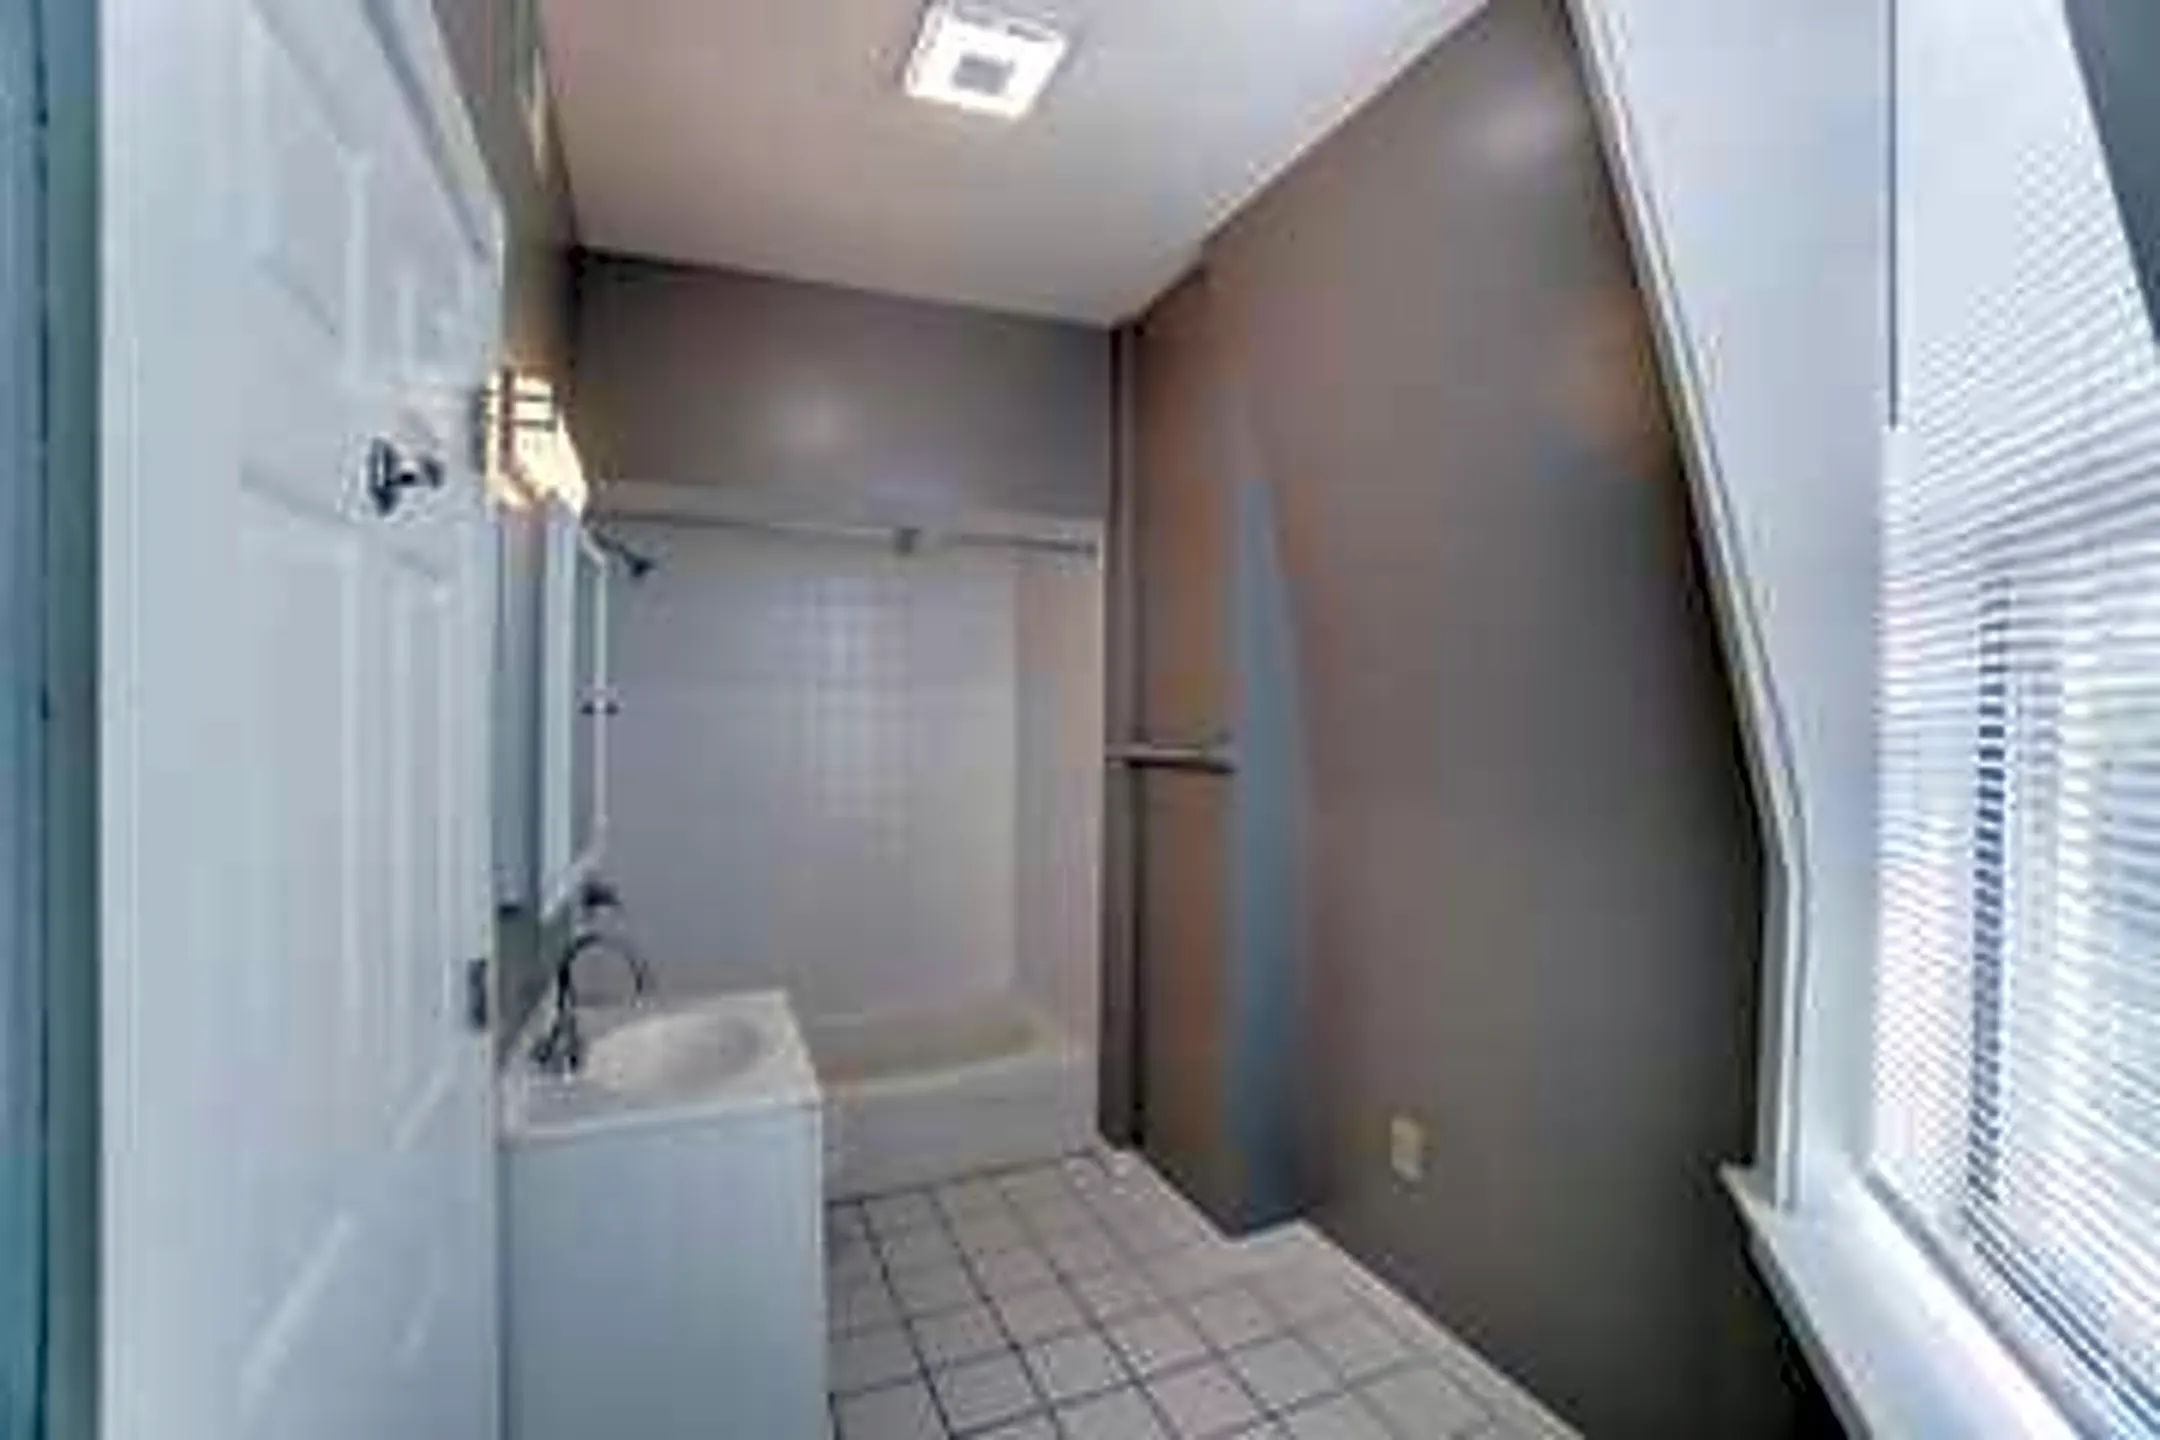 Bathroom - 852 Lincoln Ave - Cincinnati, OH